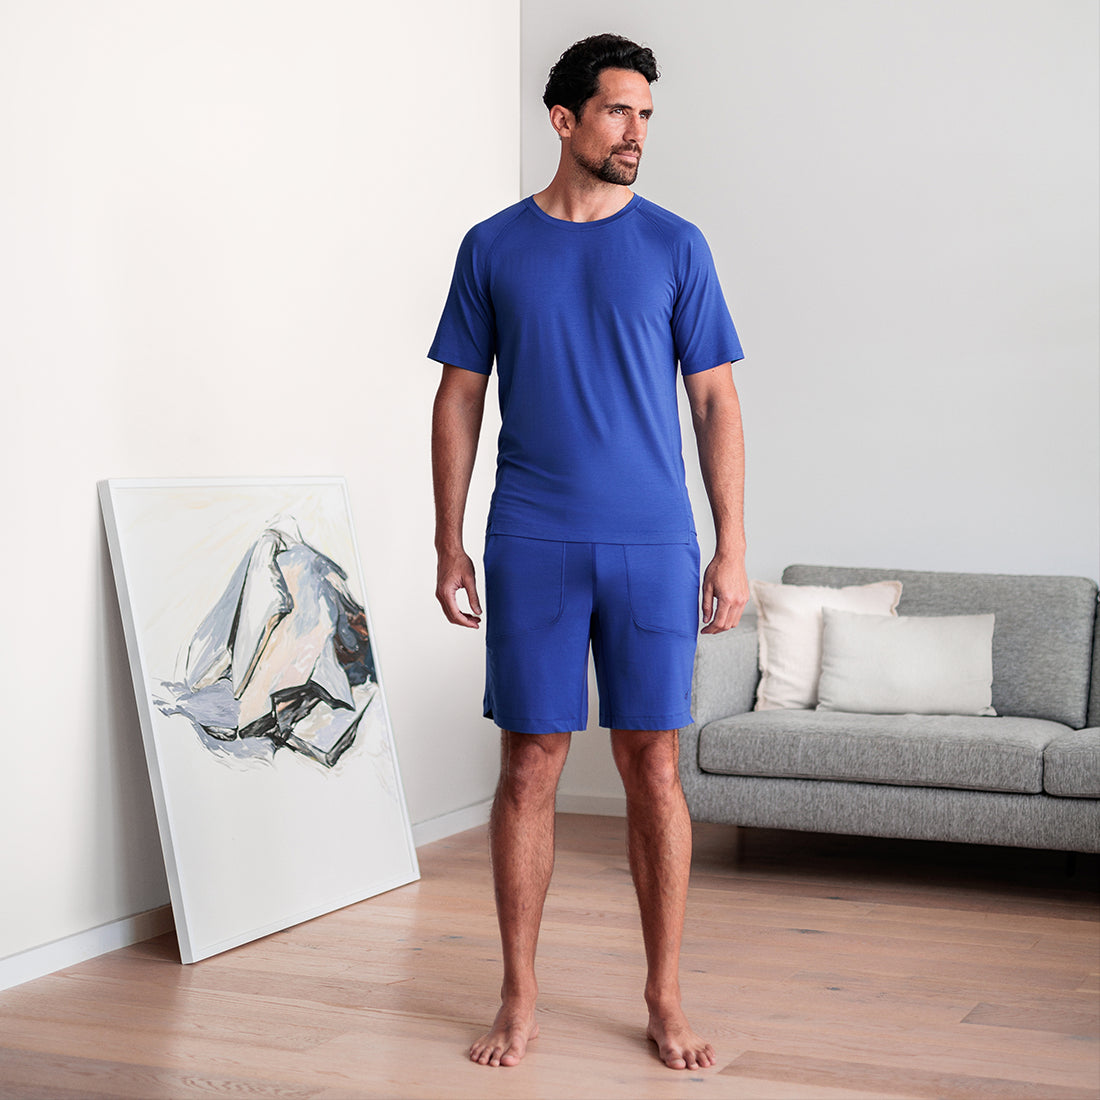 Muscle recovery sleep shorts men || Azure blue